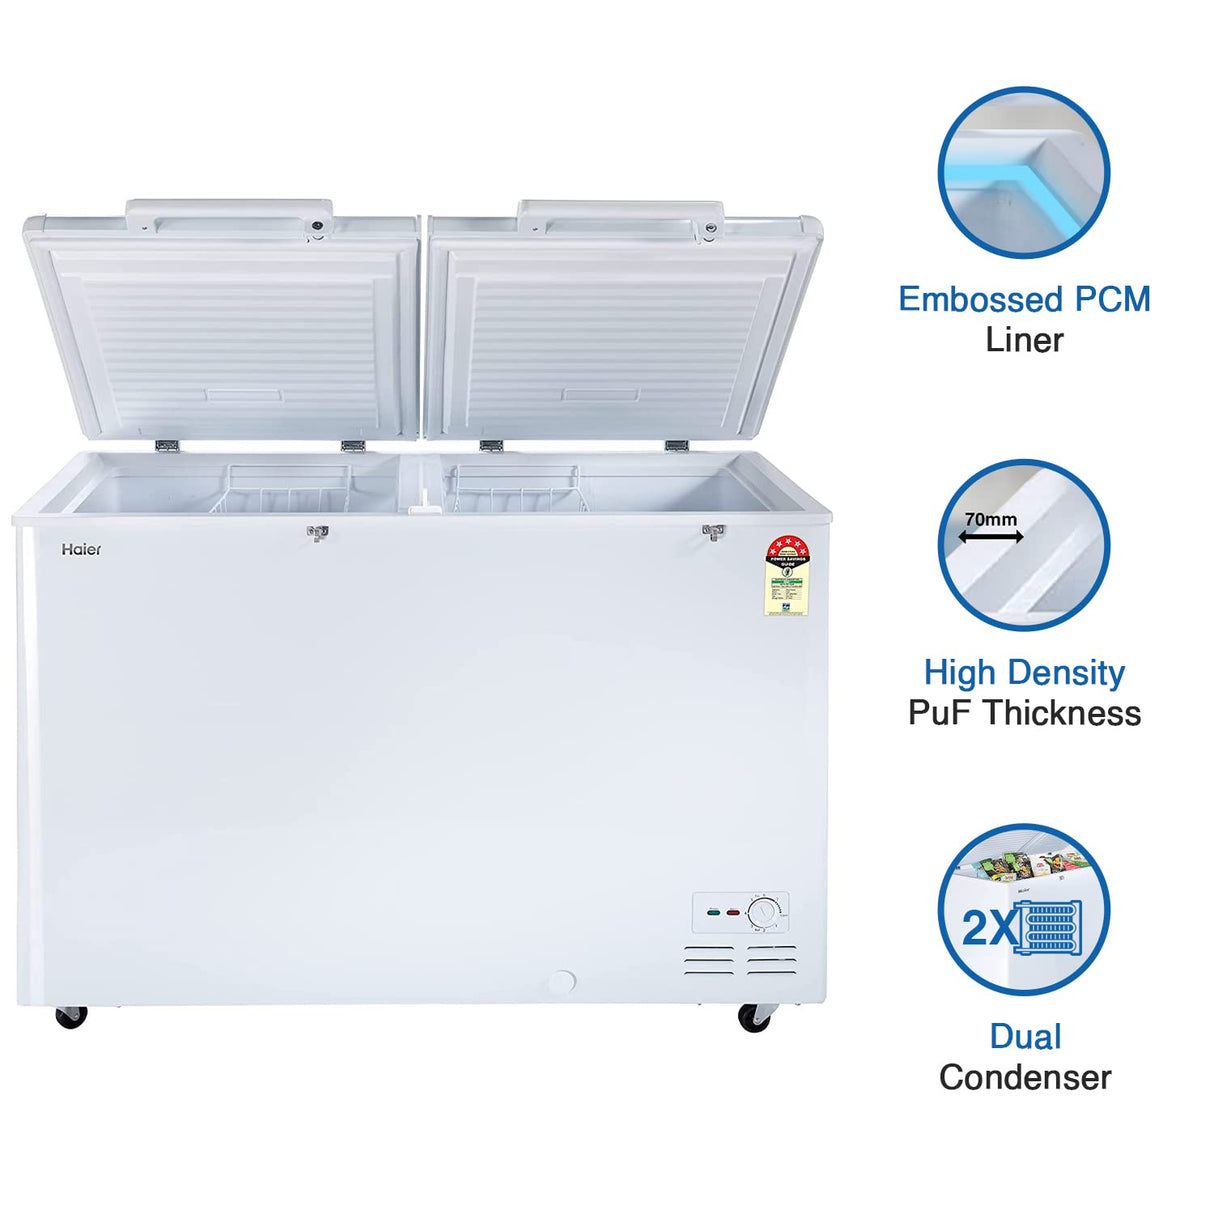 Double Door Freezer - Haier HFC-400DM5, energy-efficient and spacious.